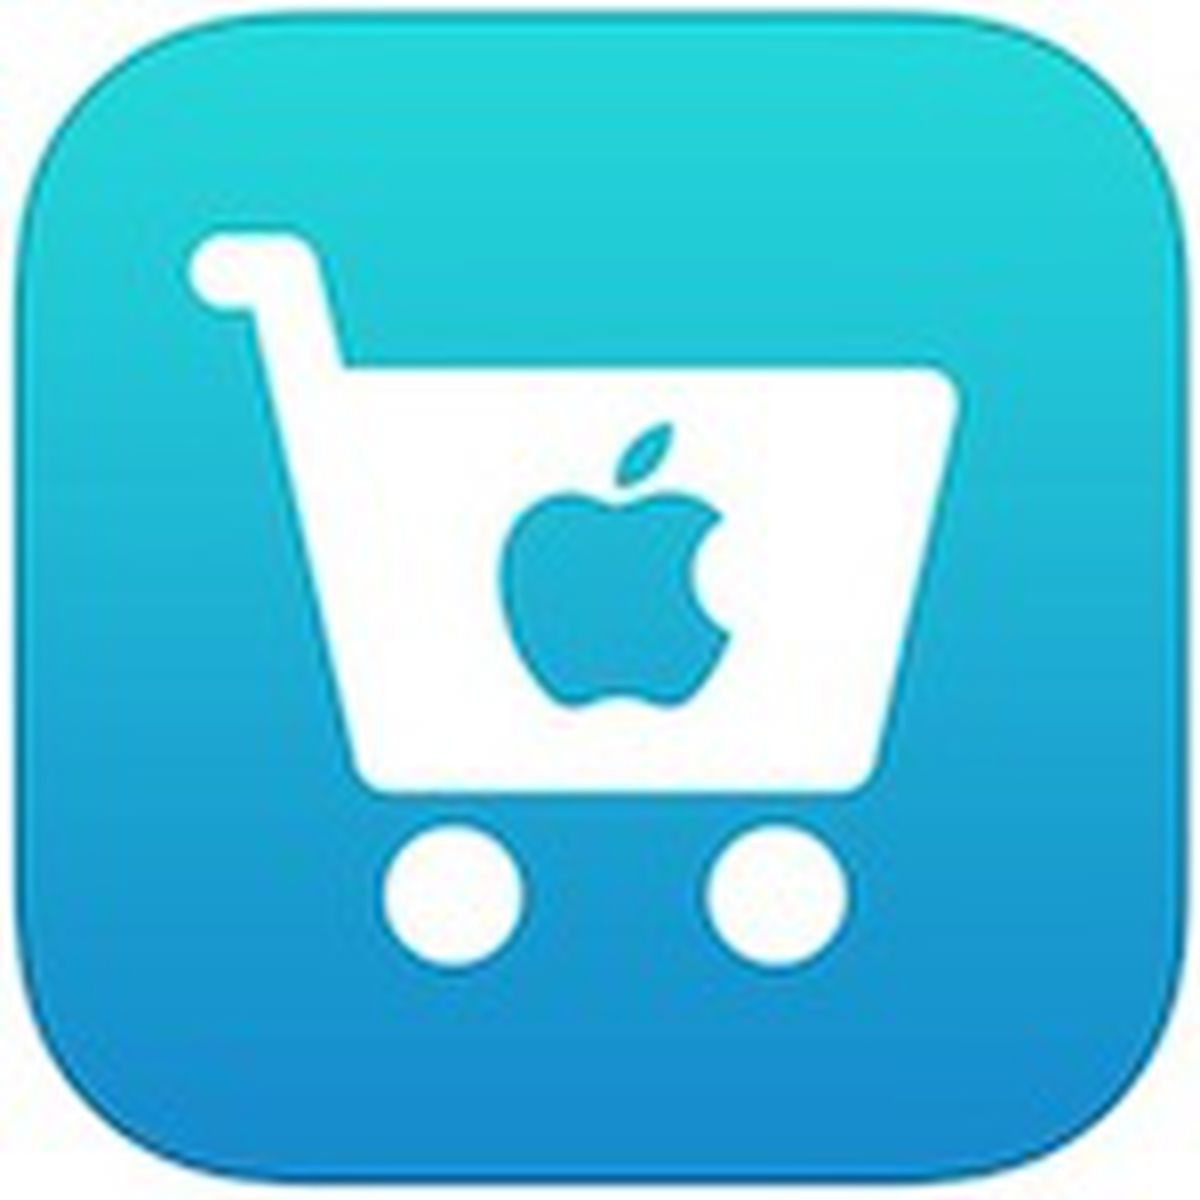 Apple iTunes Store Free App of the Week, Temple Run: OZ